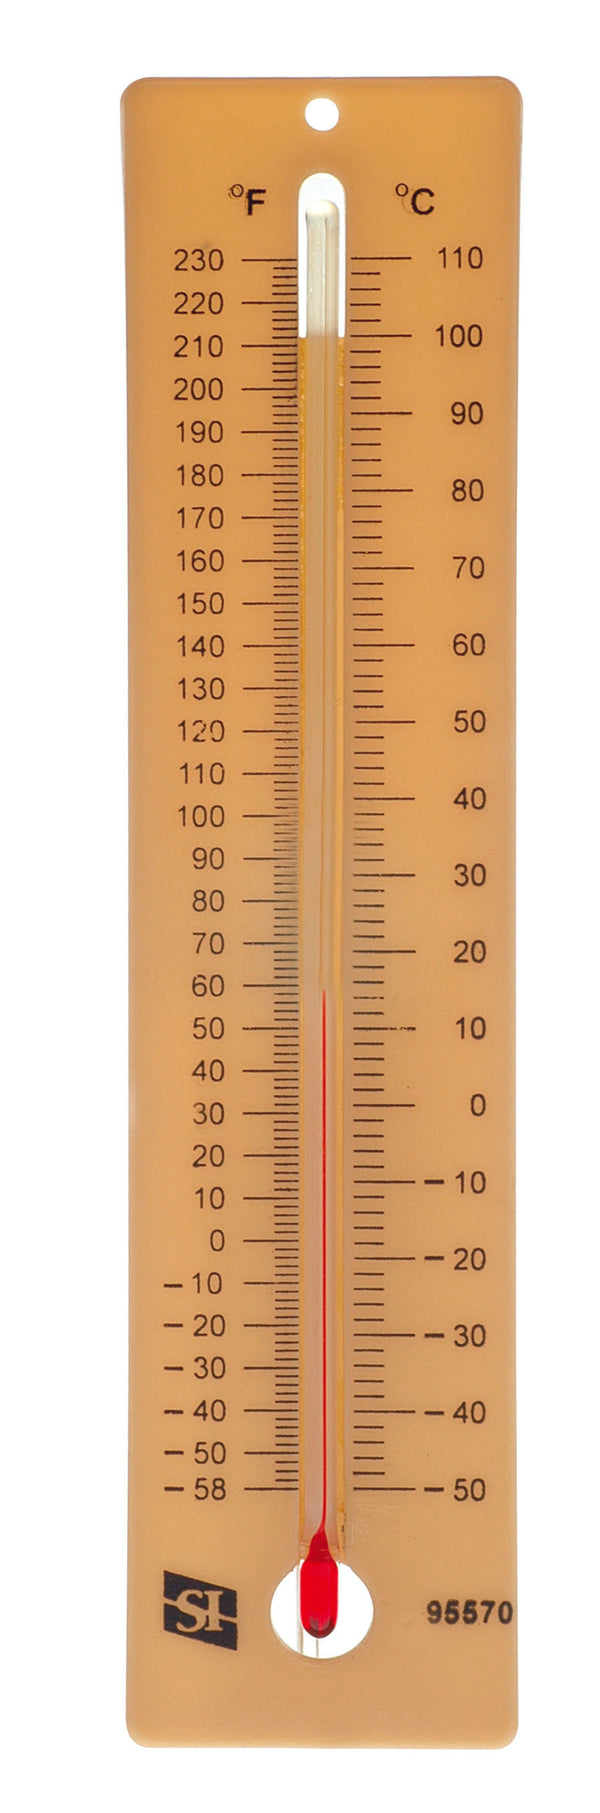 Student Thermometer - Celsius Fahrenheit